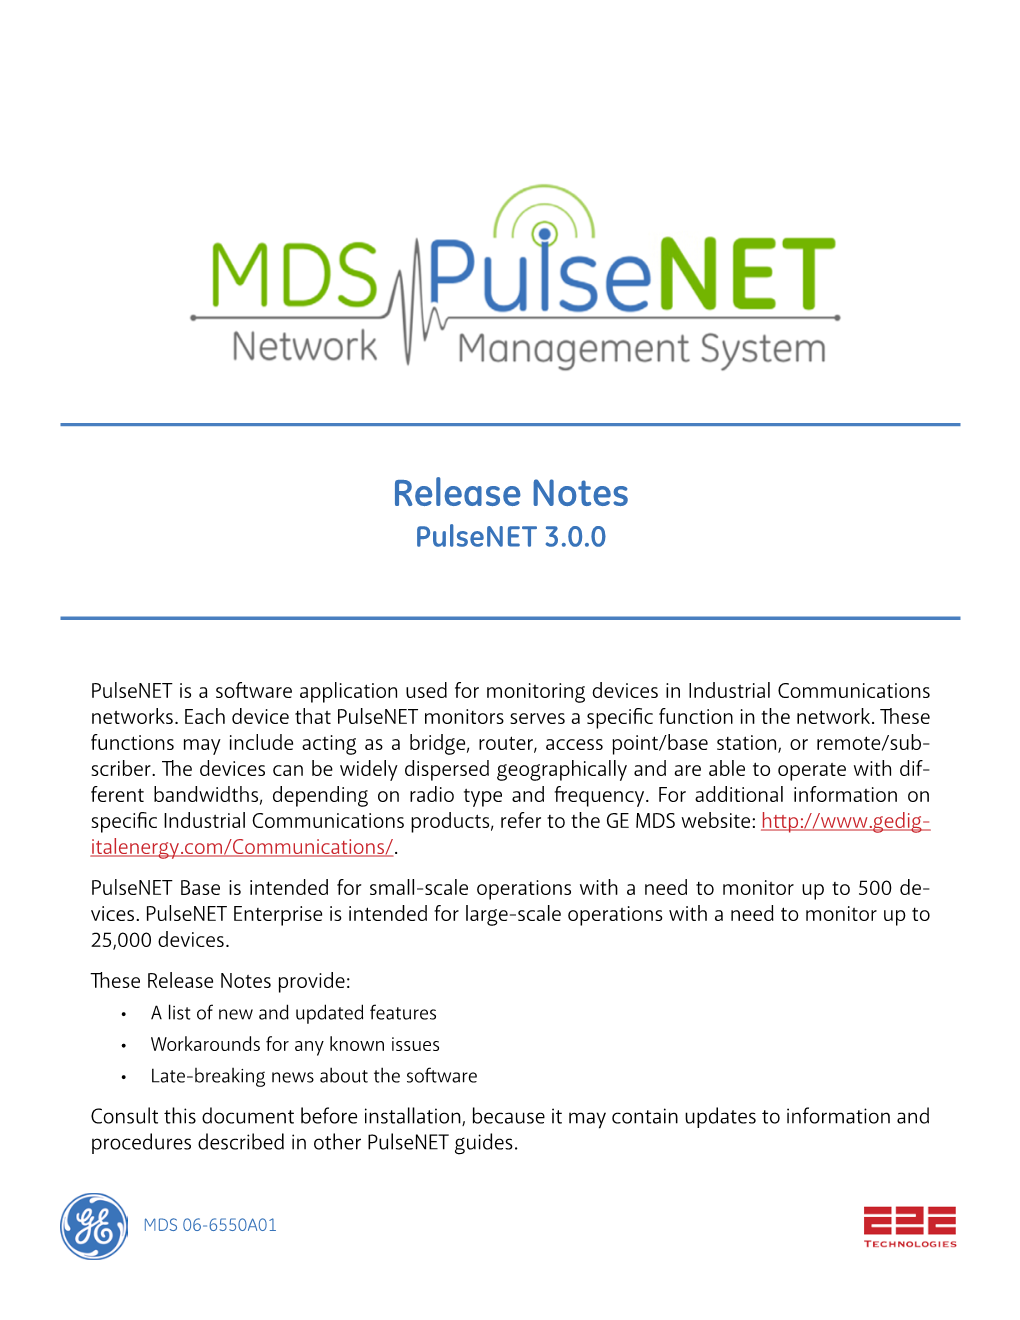 Release Notes Pulsenet 3.0.0